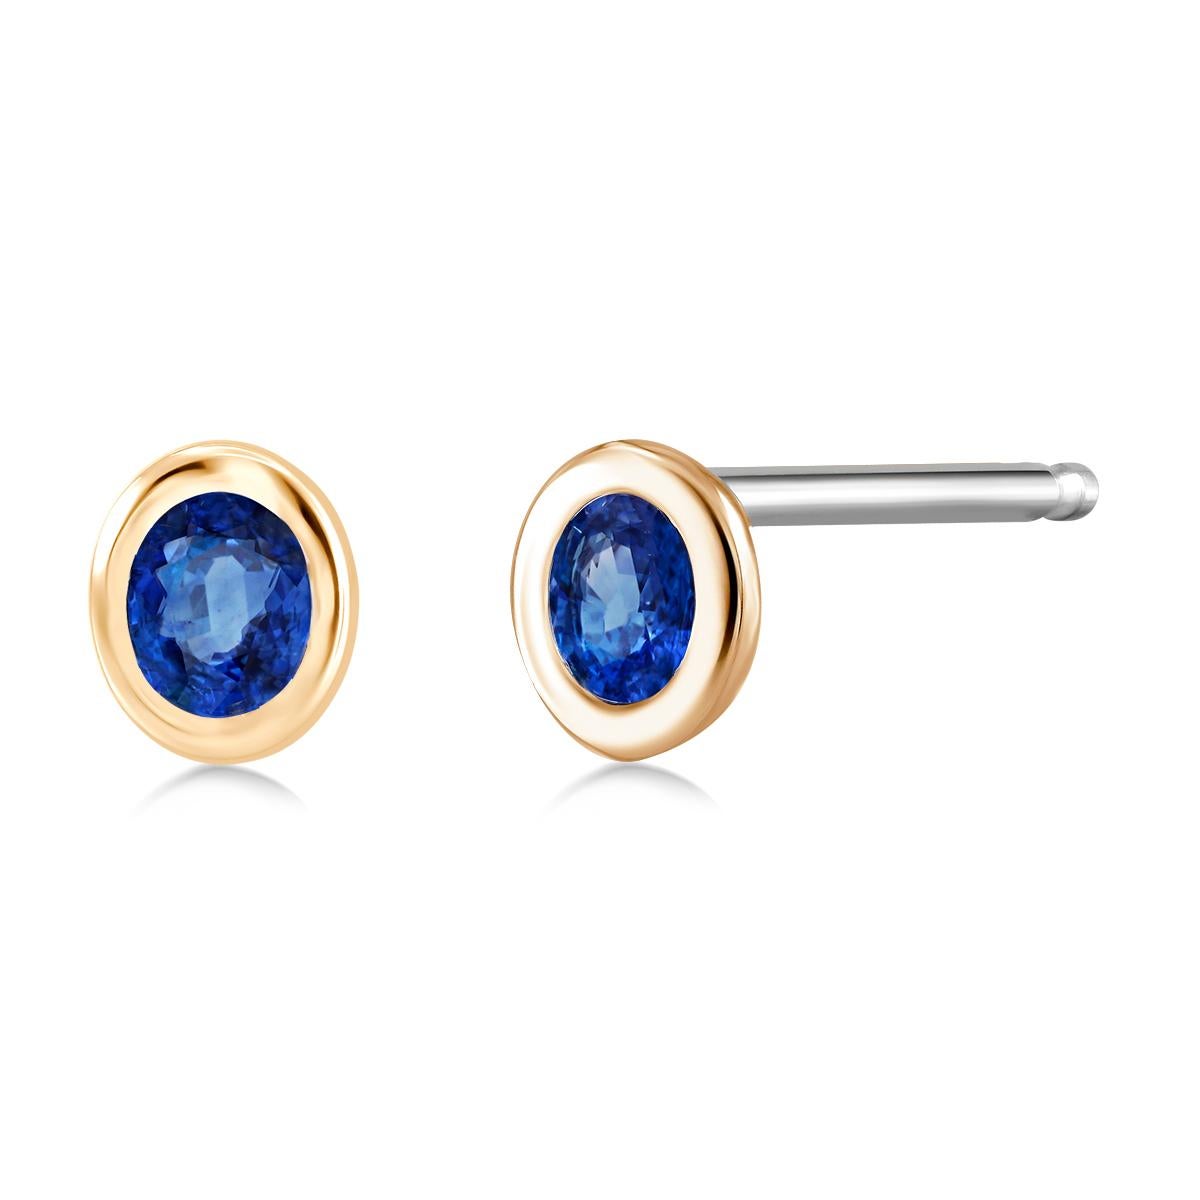 Contemporary Yellow Gold Bezel Set Blue Sapphires Stud Earrings